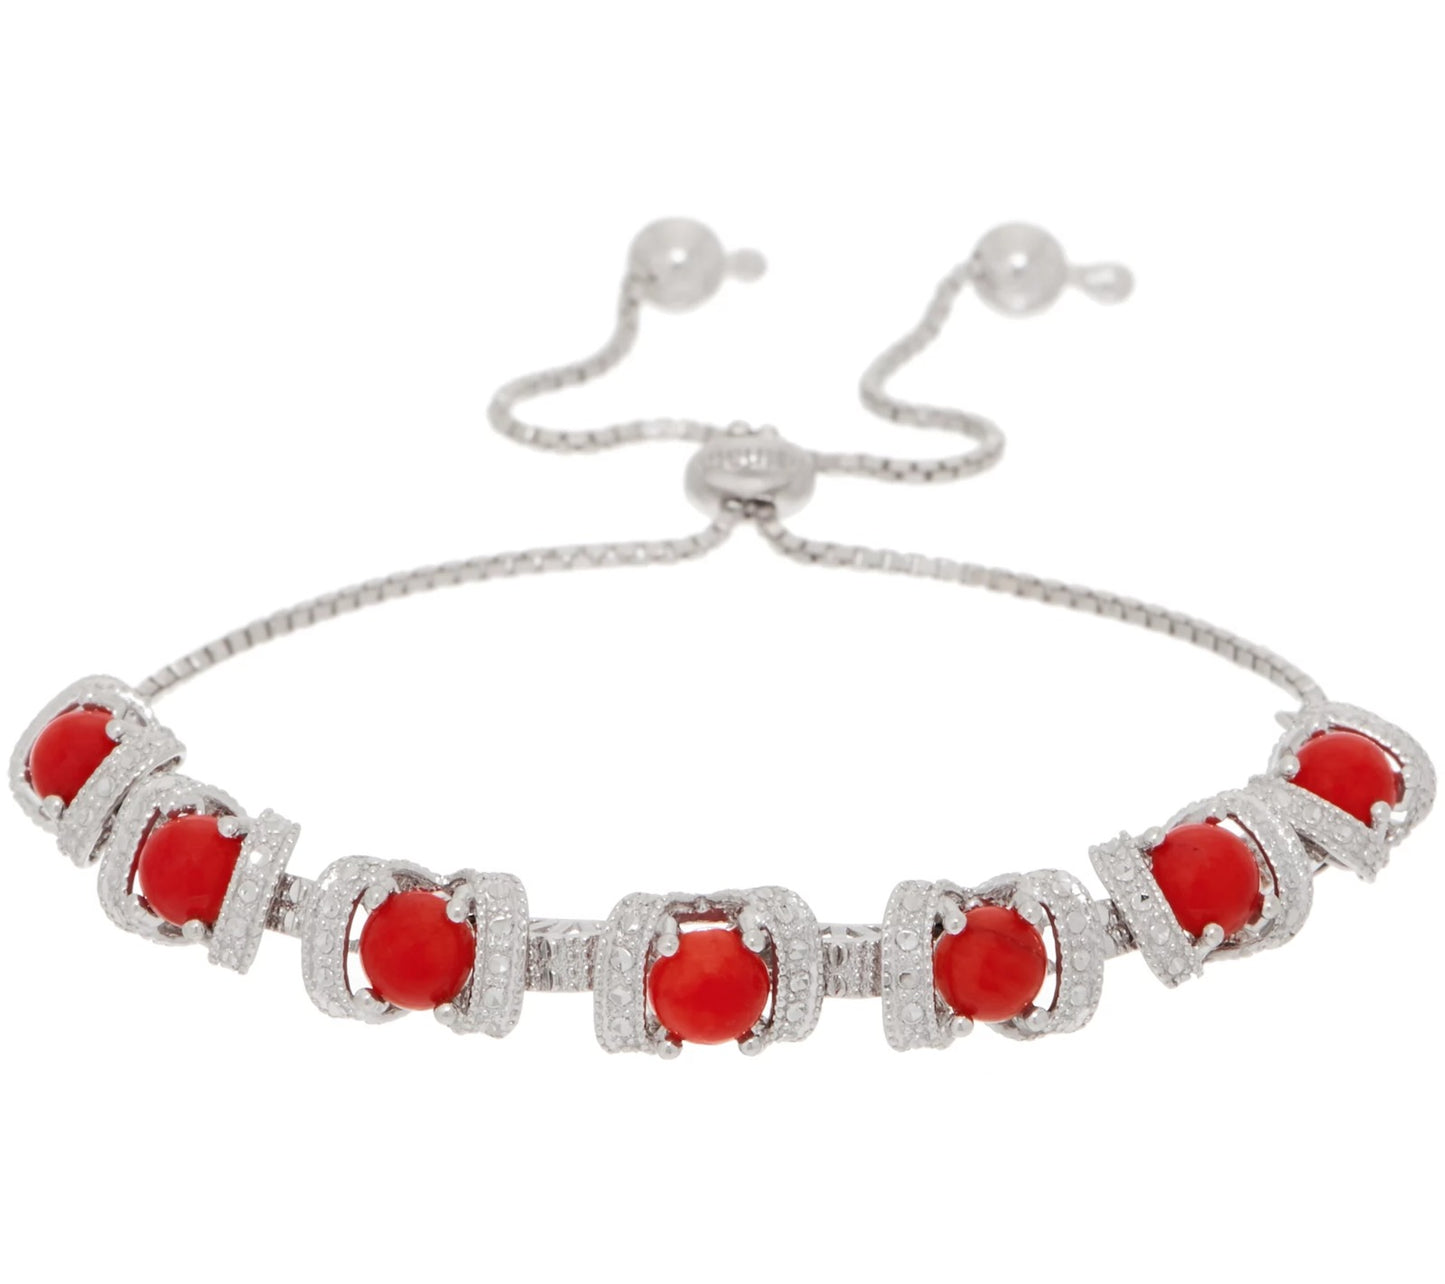 Gemstone Diamond Cut Adjustable Bracelet, Sterling Silver - Coral Red